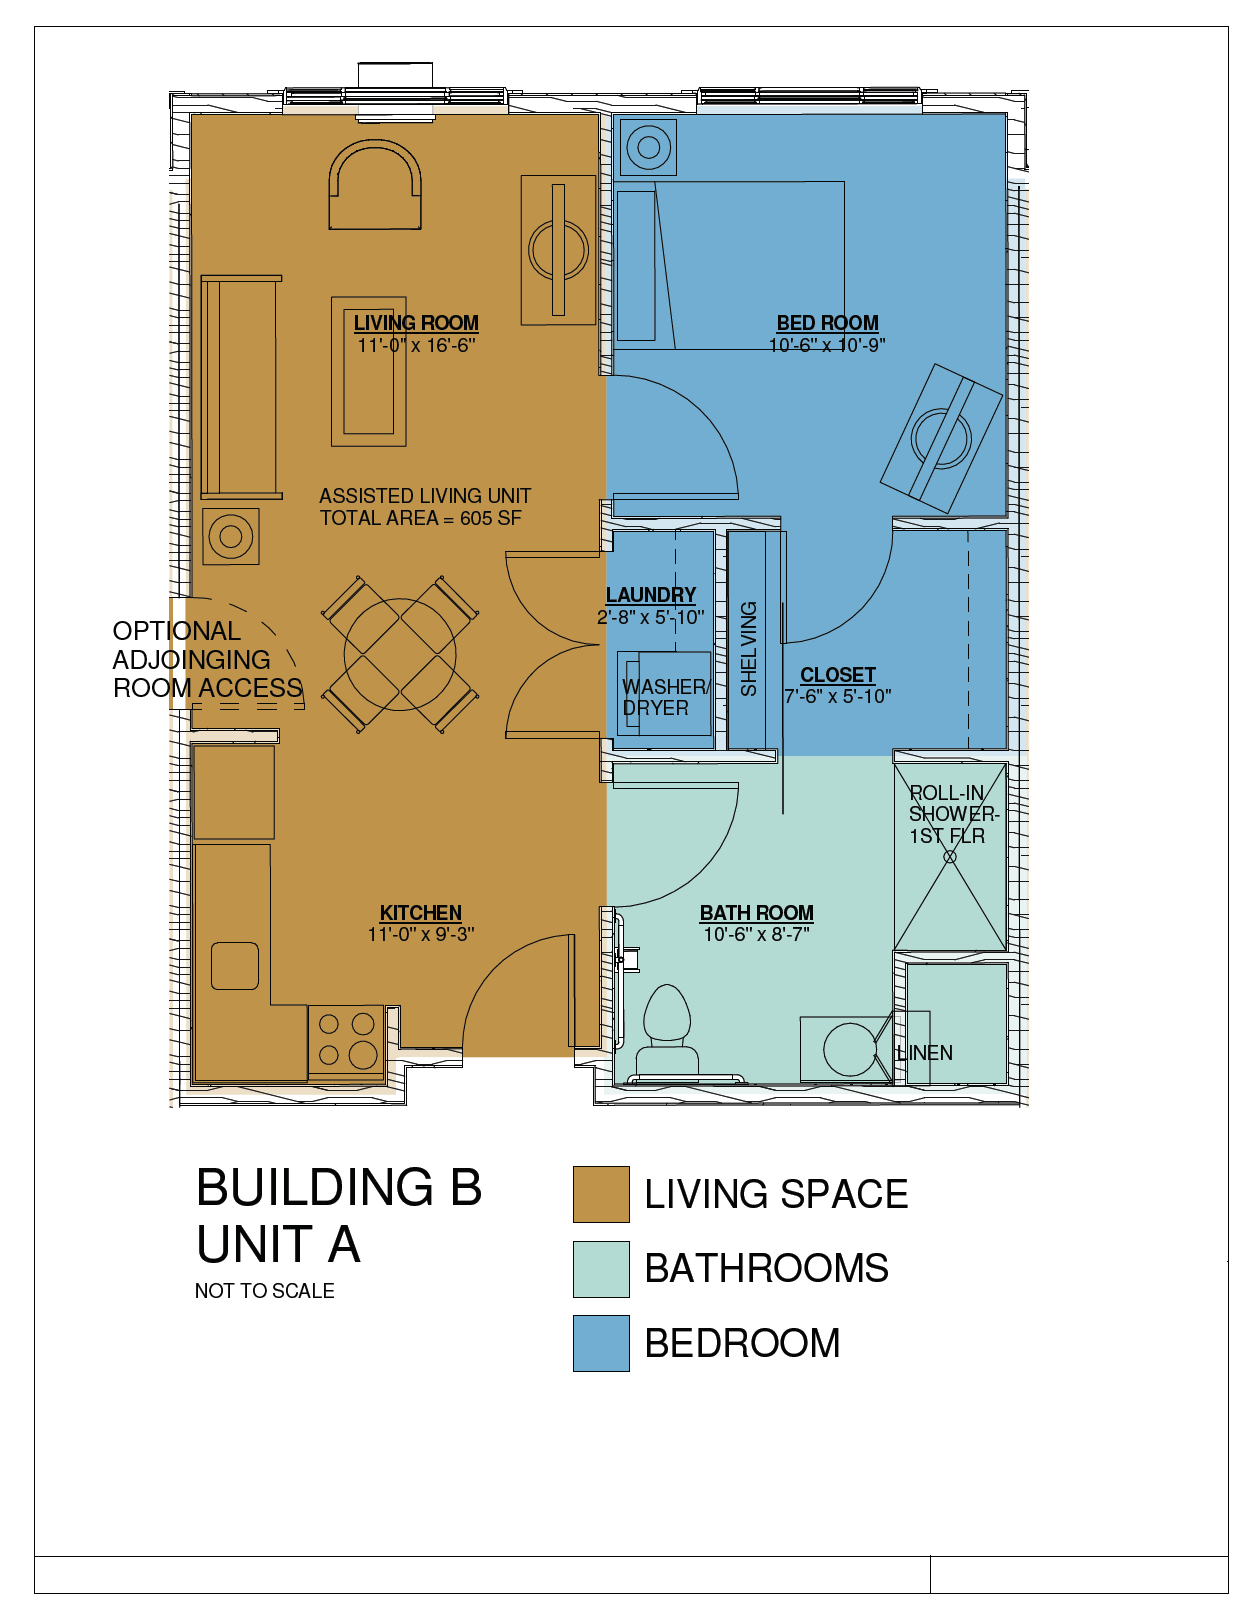 Building b unit floor plan.